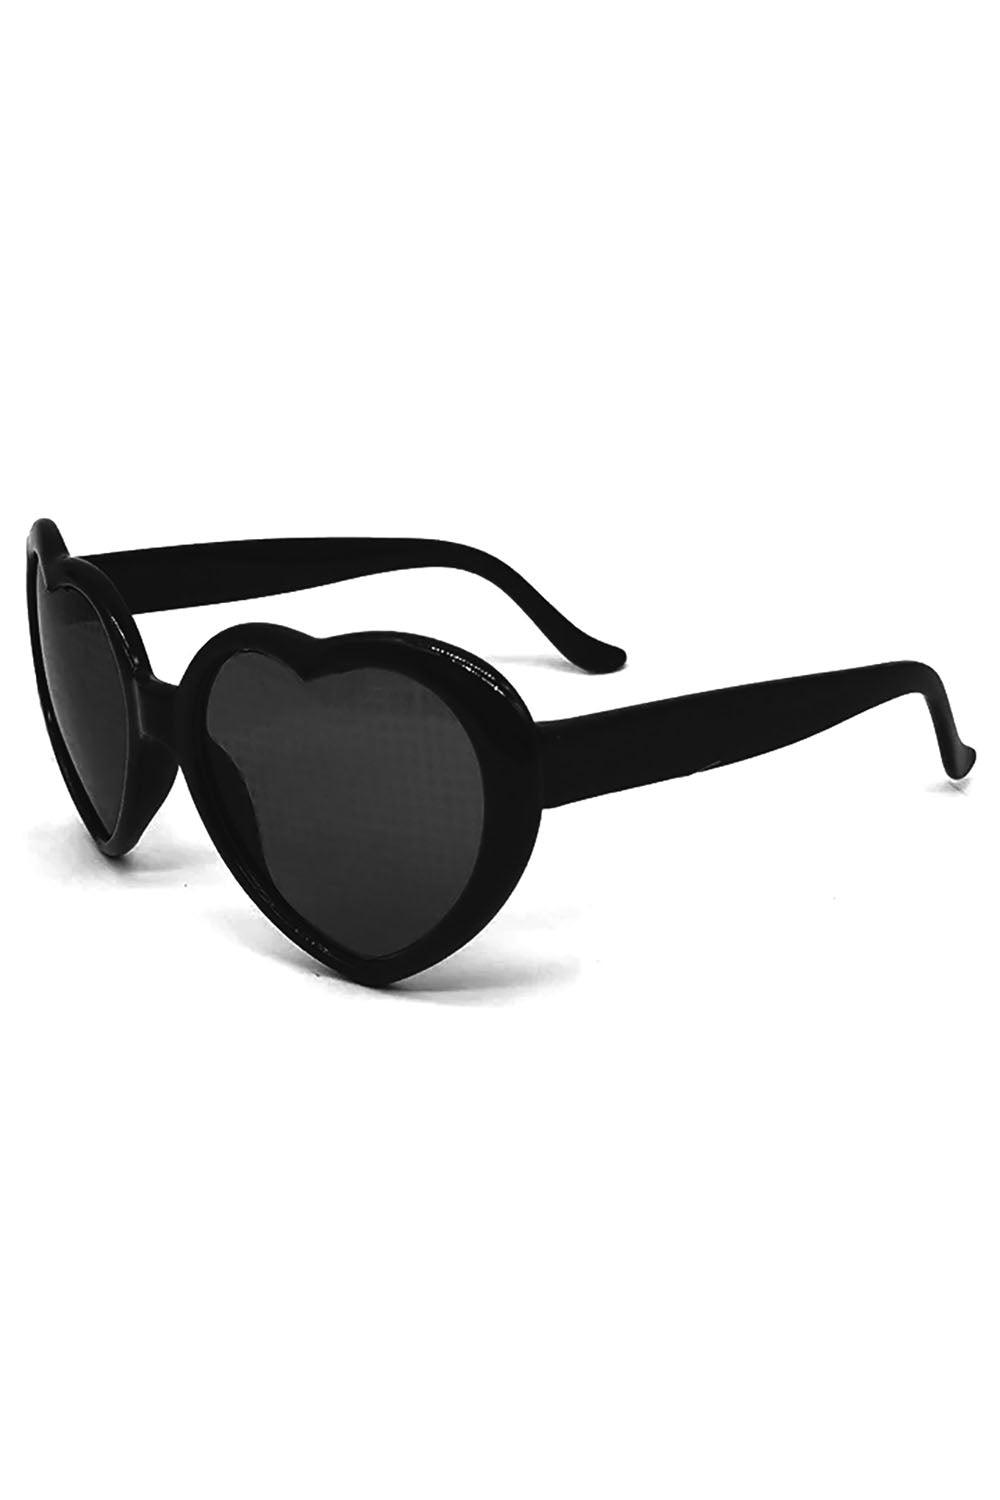 Catalyst Black Hearted Sunglasses - VampireFreaks